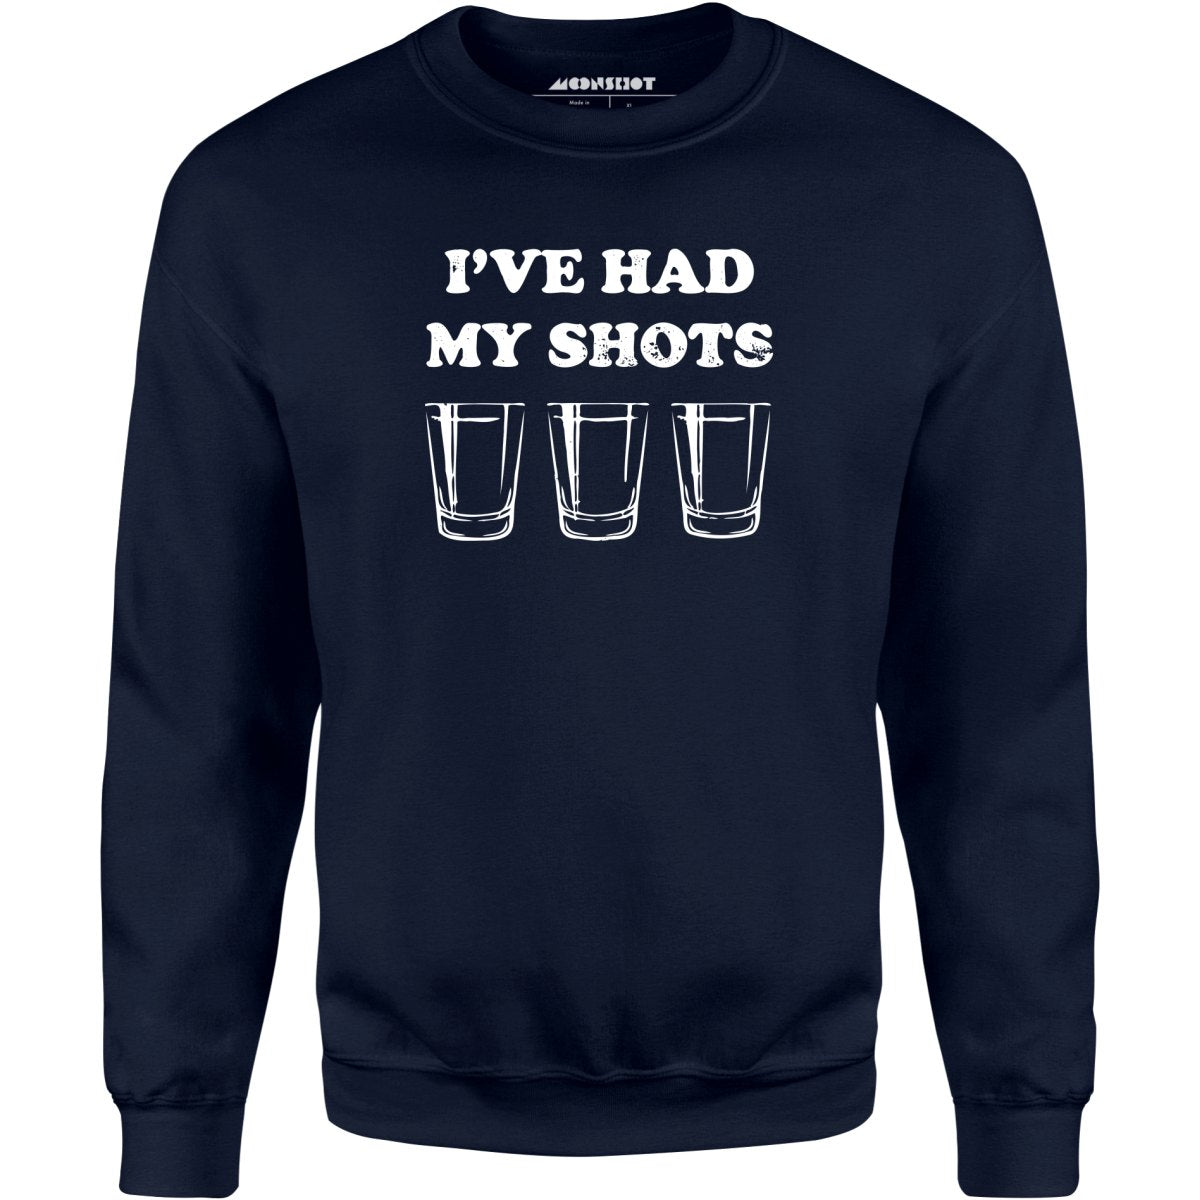 I've Had My Shots - Unisex Sweatshirt